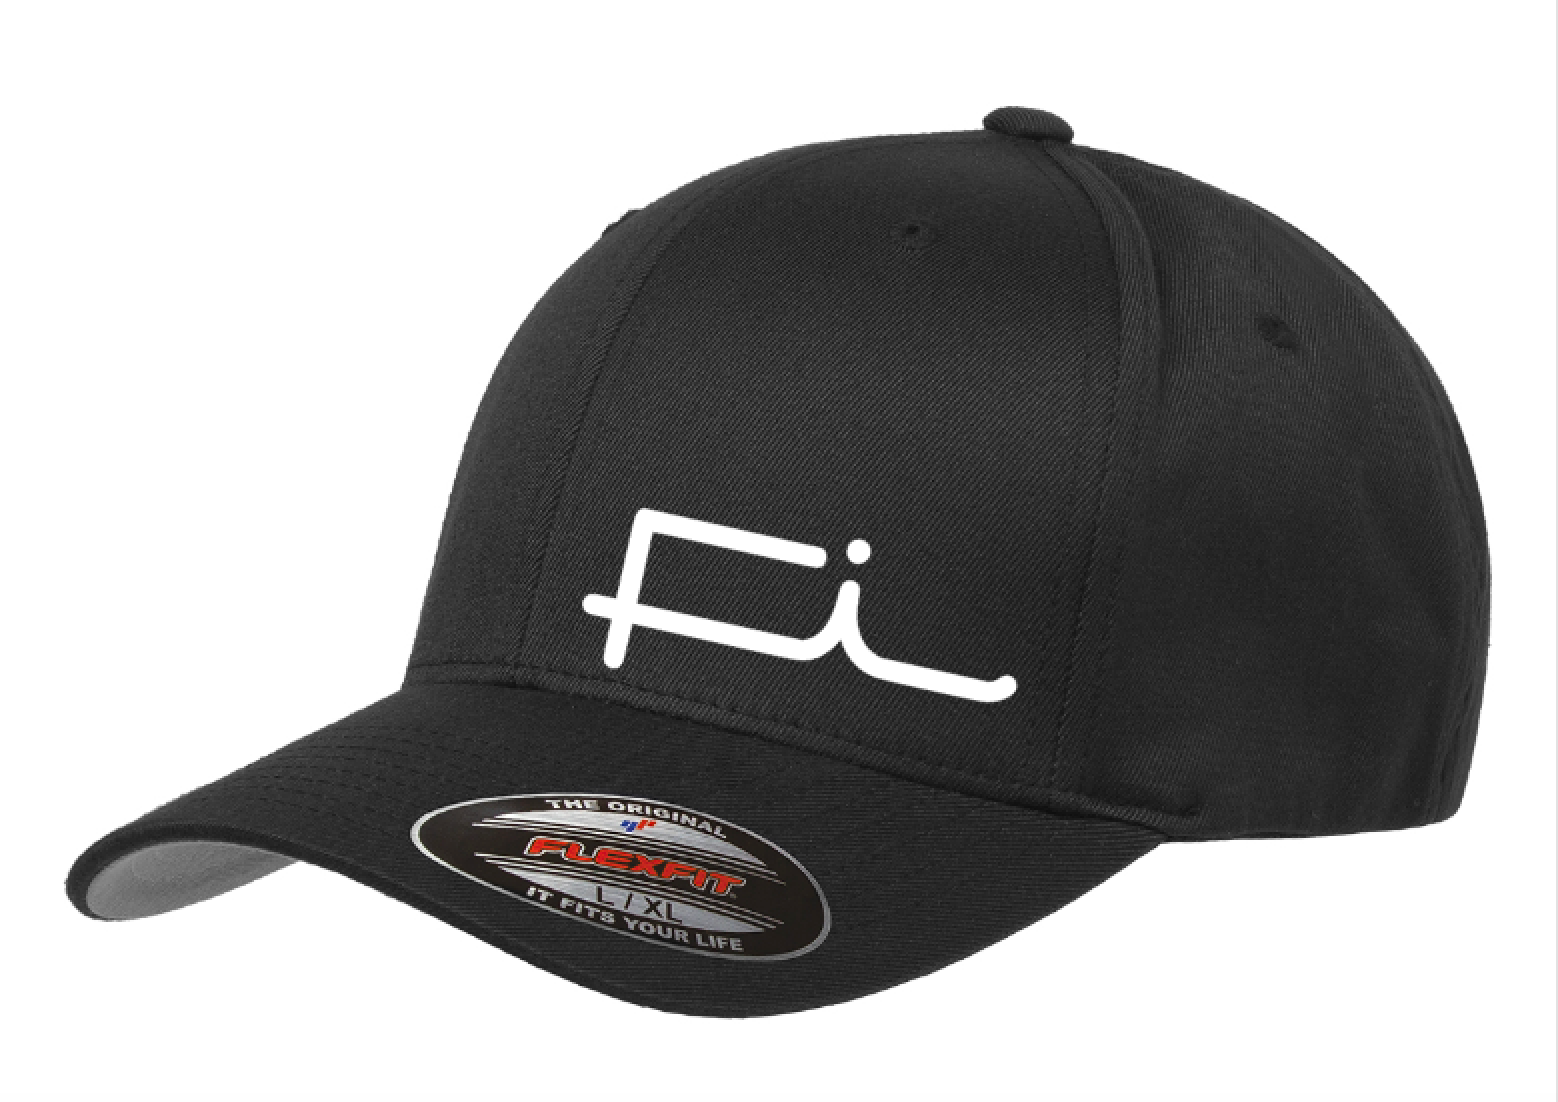 Fi Classic Flex Fit Hats